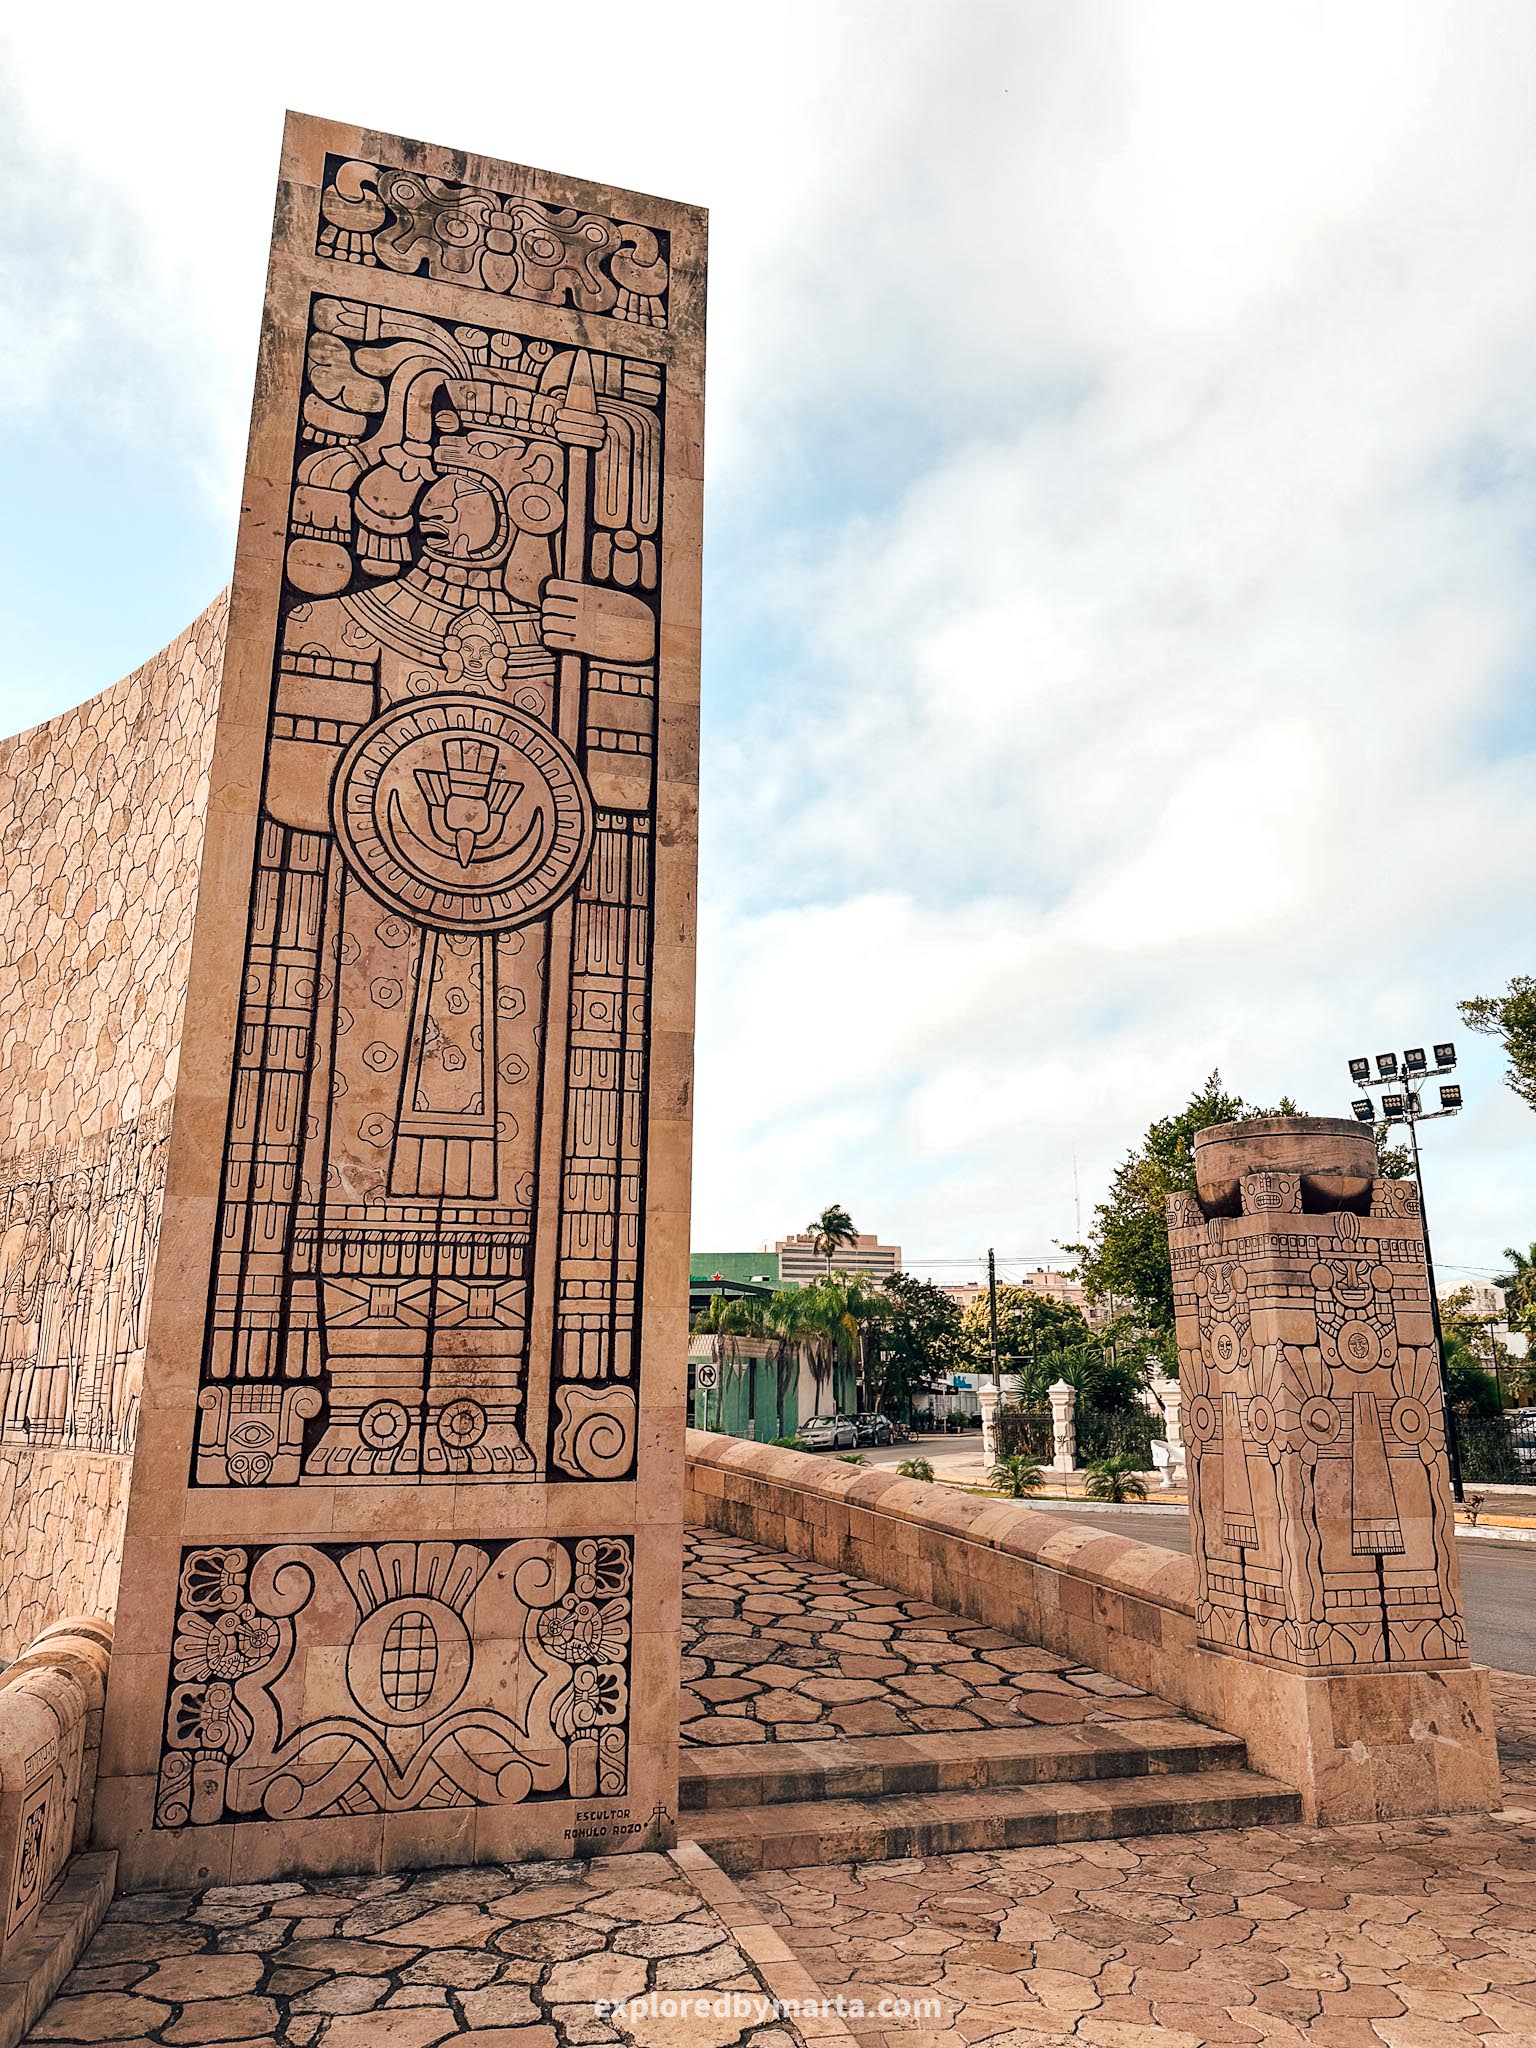 Merida, Mexico - Monumento a La Patria monument in Merida - a Mayan style homage to the history of Mexico